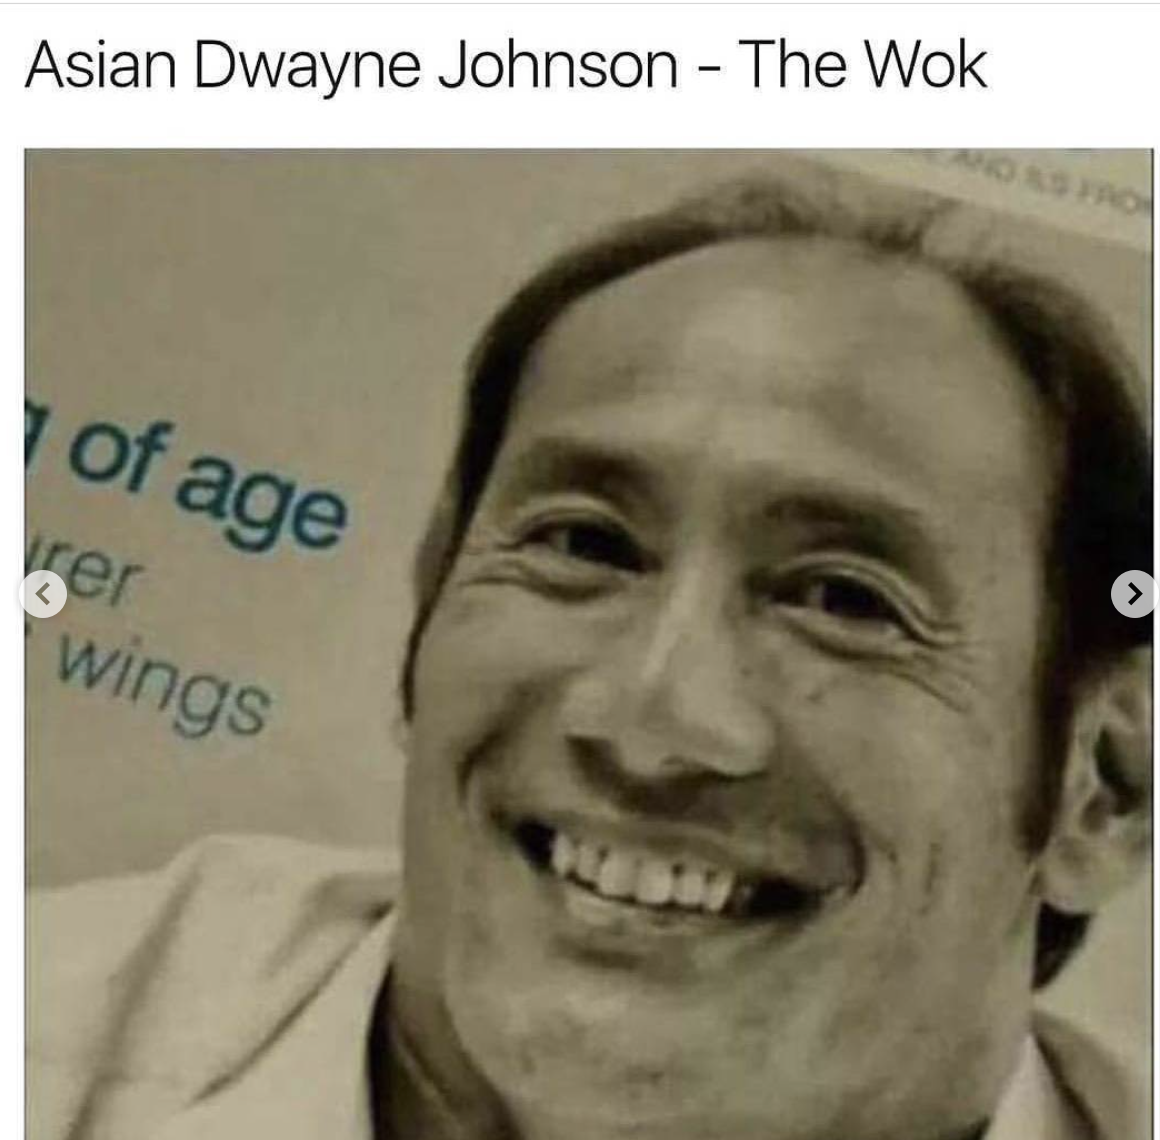 Asian Dwayne Johnson The Wok - Funny Celebrity meme